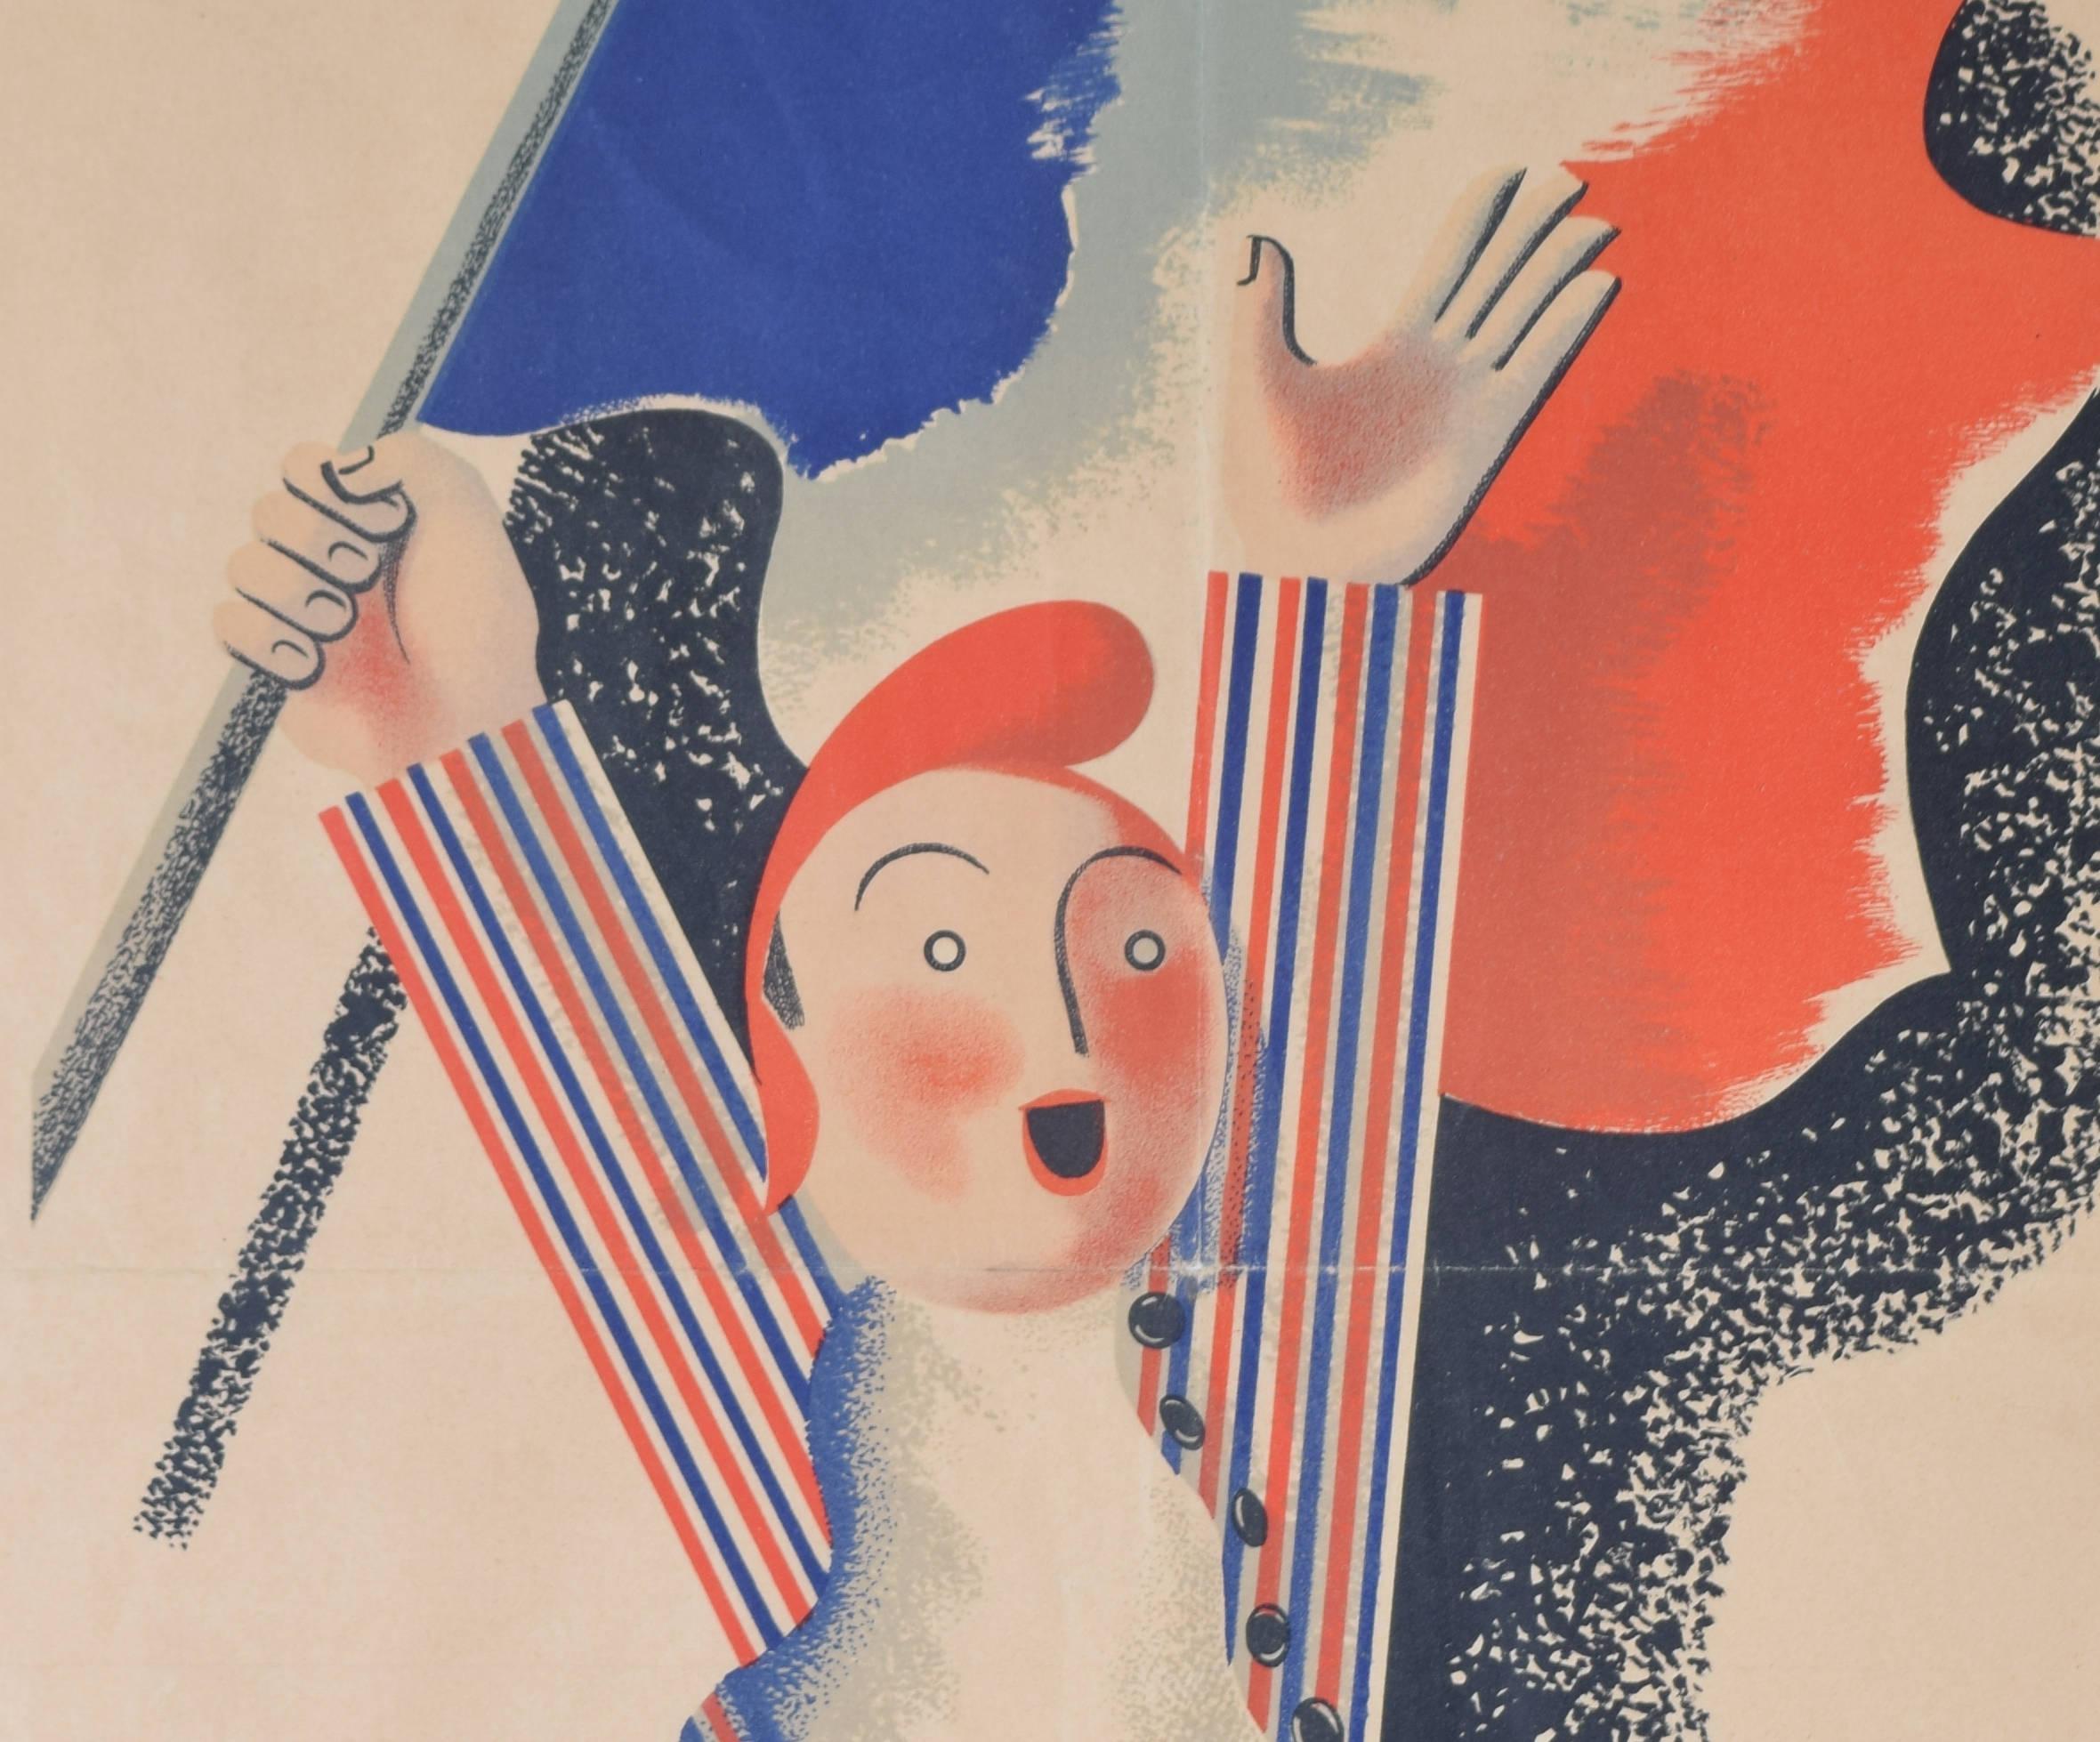 Loterie Nationale La Marseillaise original vintage poster by Edgard Derouet For Sale 2